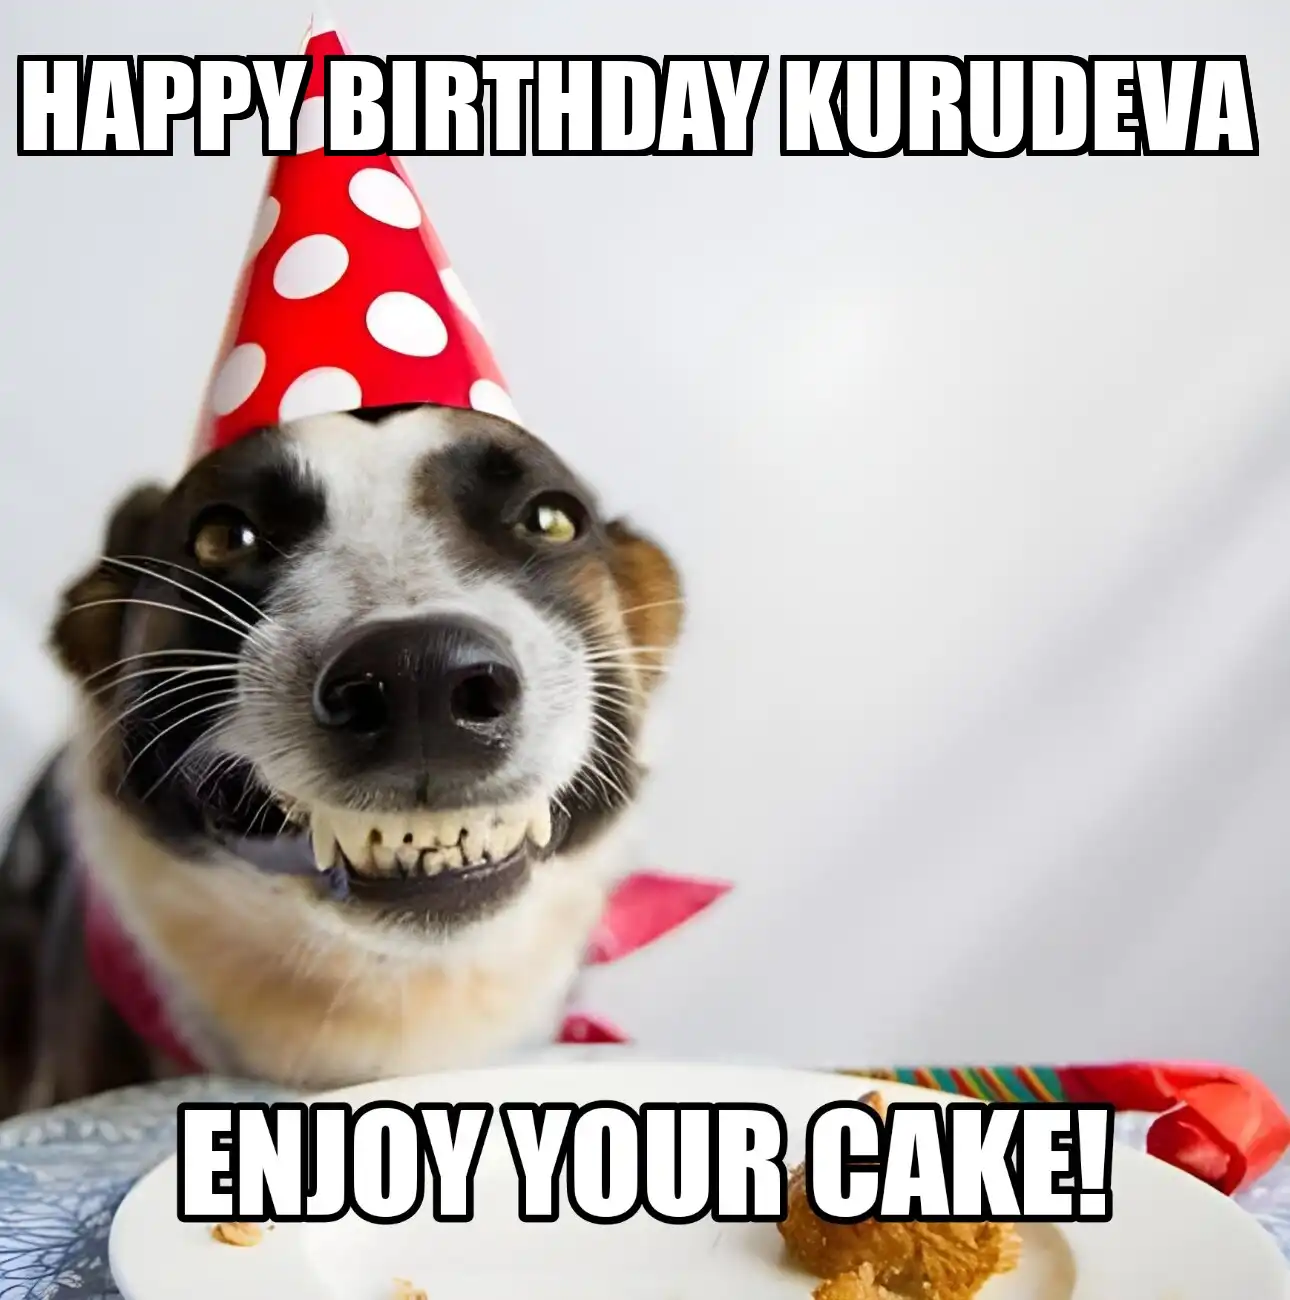 Happy Birthday Kurudeva Enjoy Your Cake Dog Meme